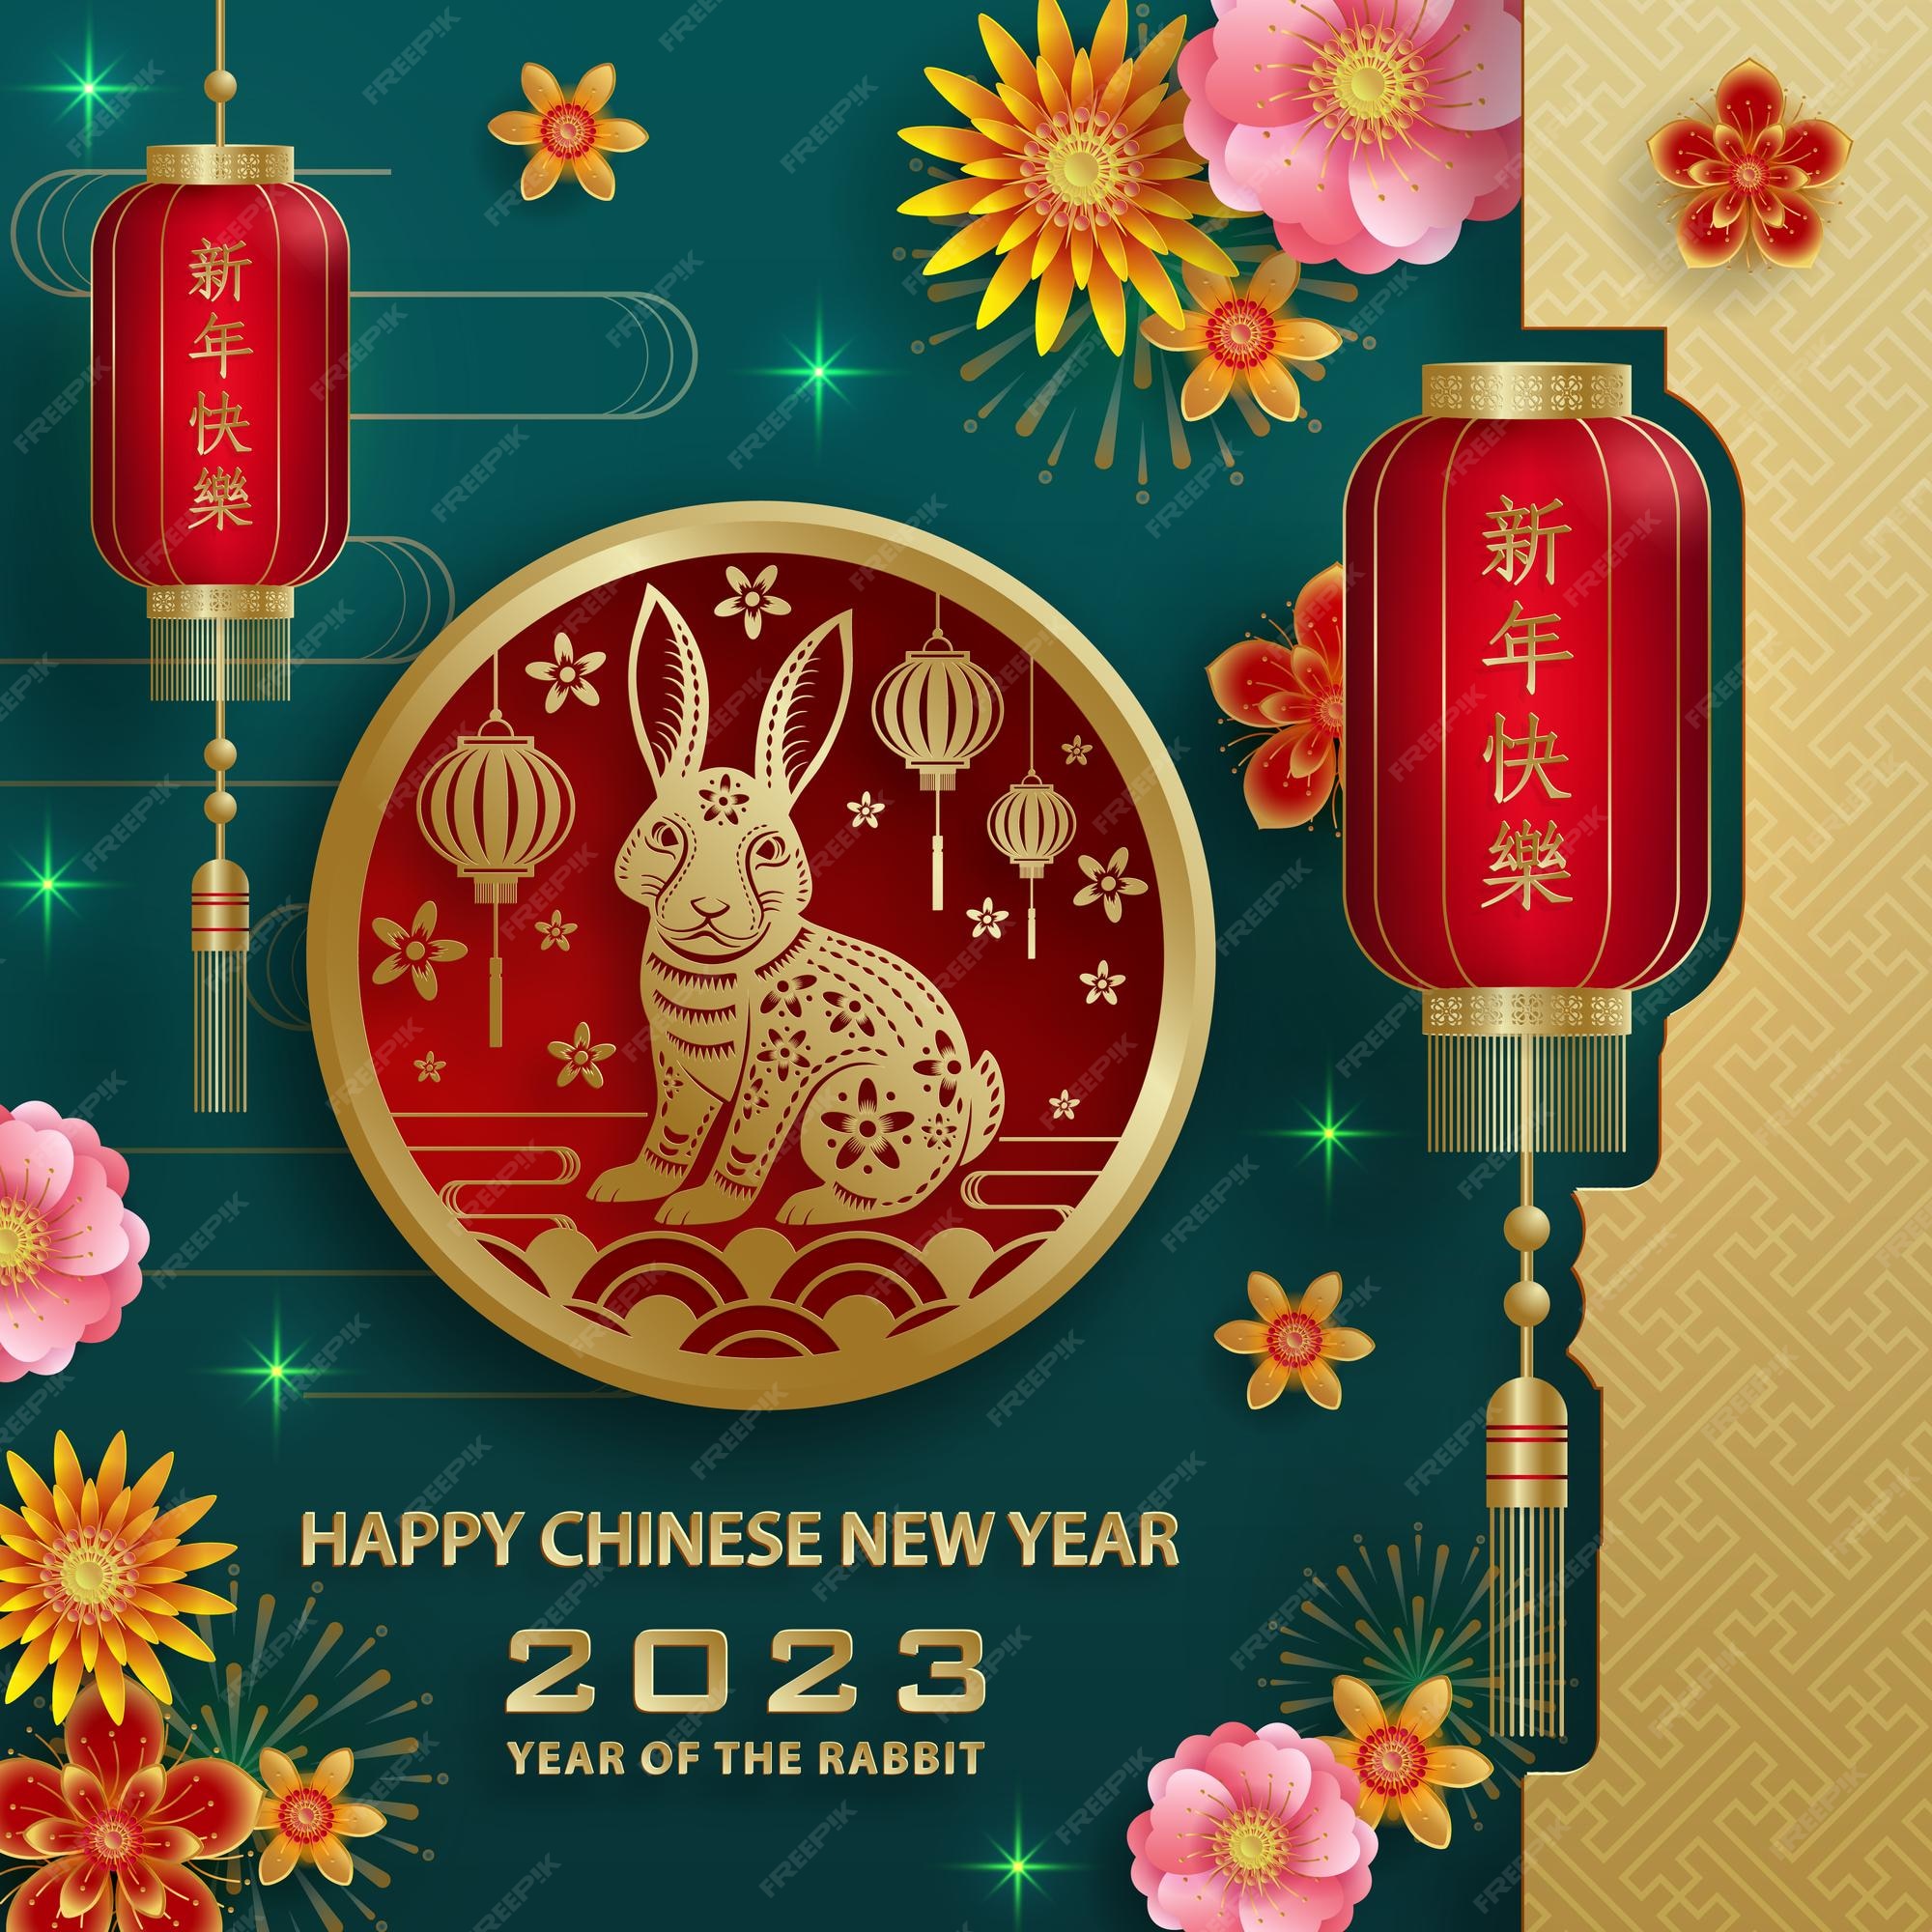 chinese new year 2023 gif